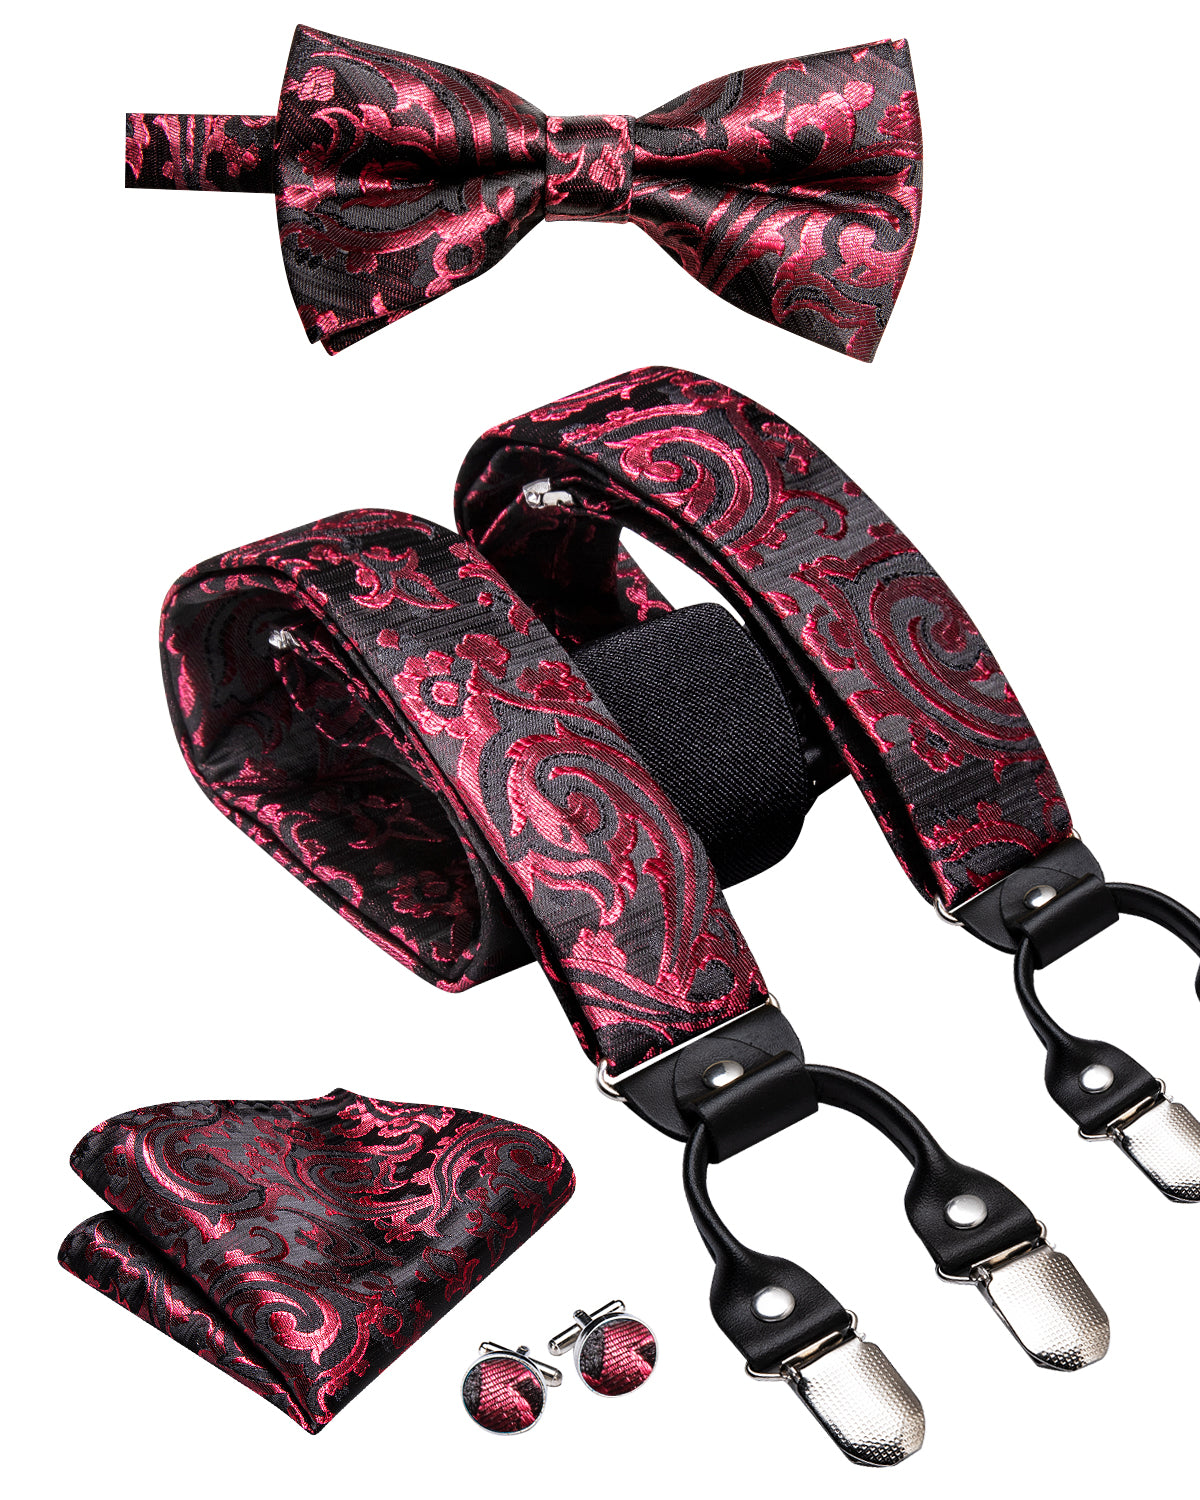 BD3053 Men's Braces Designer Clip Suspender Set [Wine Garden]